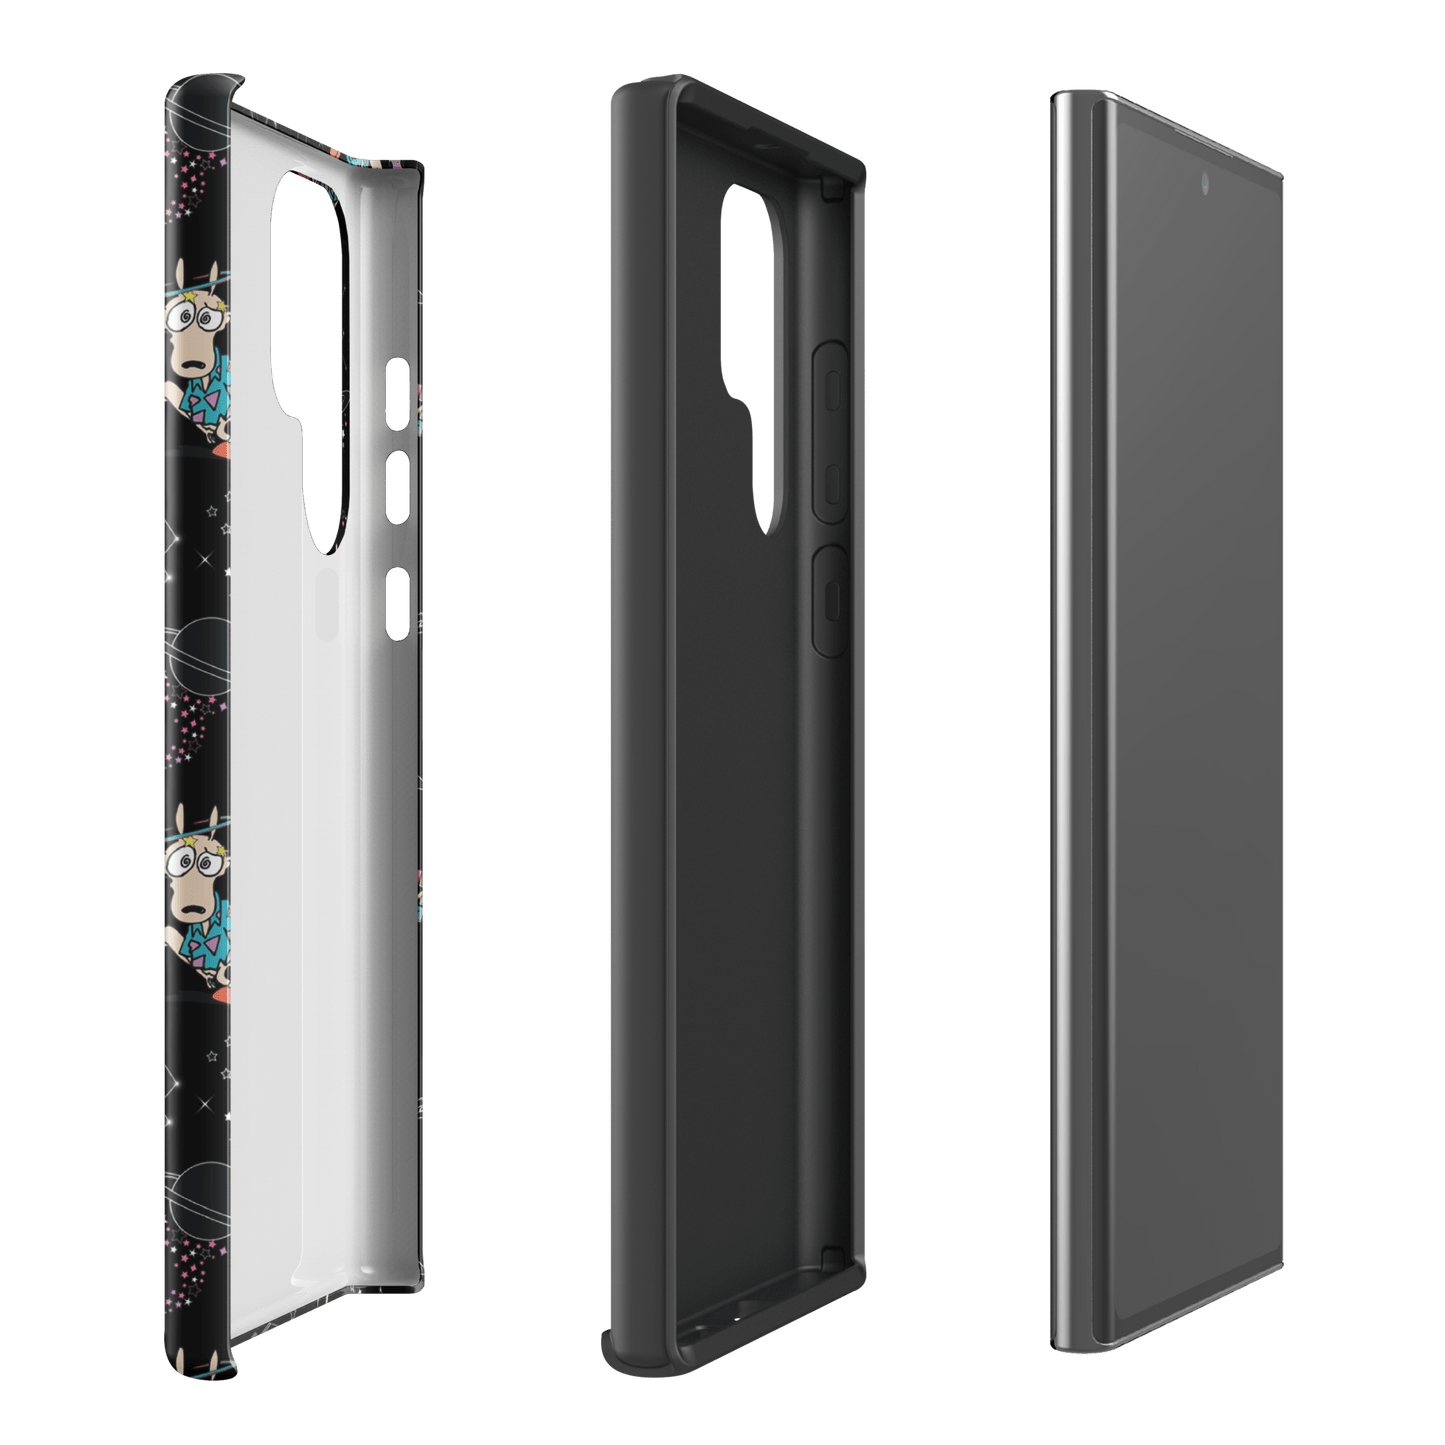 Rocko's Modern Life Space Pattern Tough Phone Case - Samsung - Paramount Shop